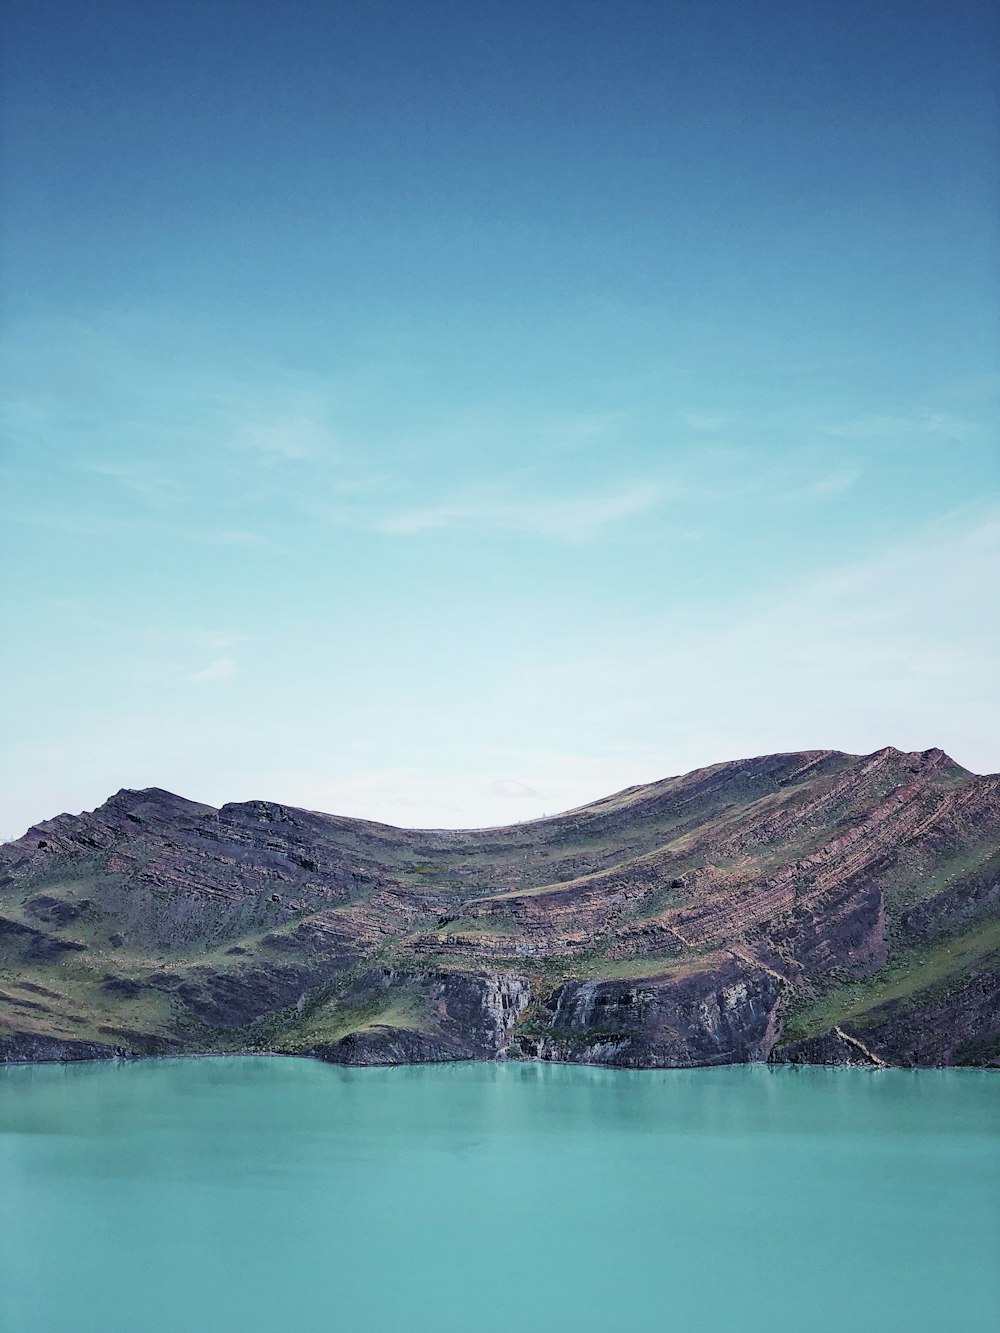 blue lake on mountain slope